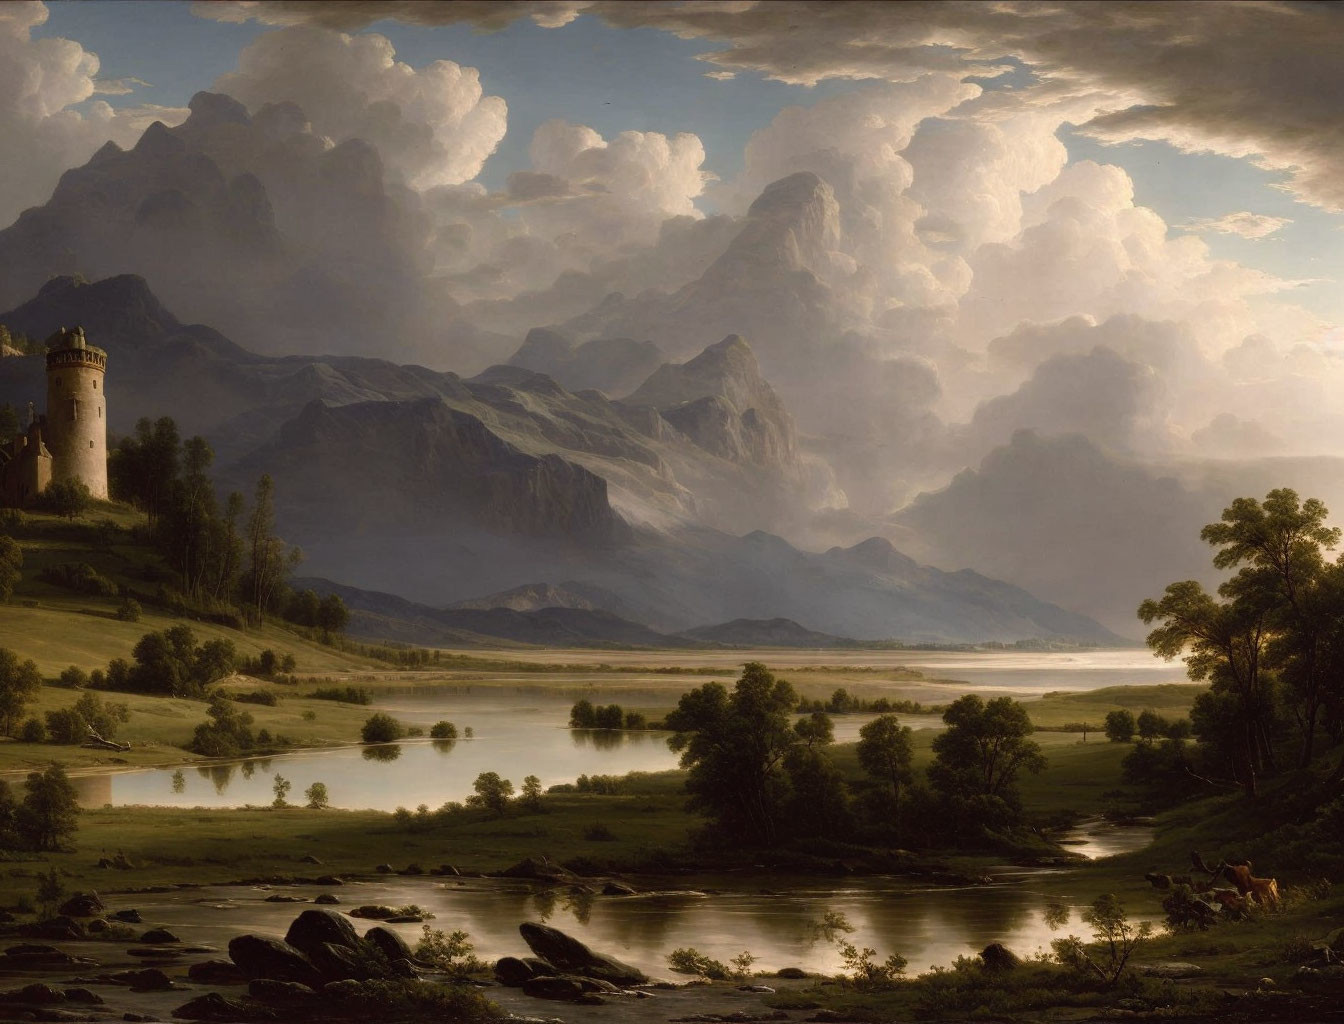 Scenic landscape painting: castle, mountains, river, cloudy sky